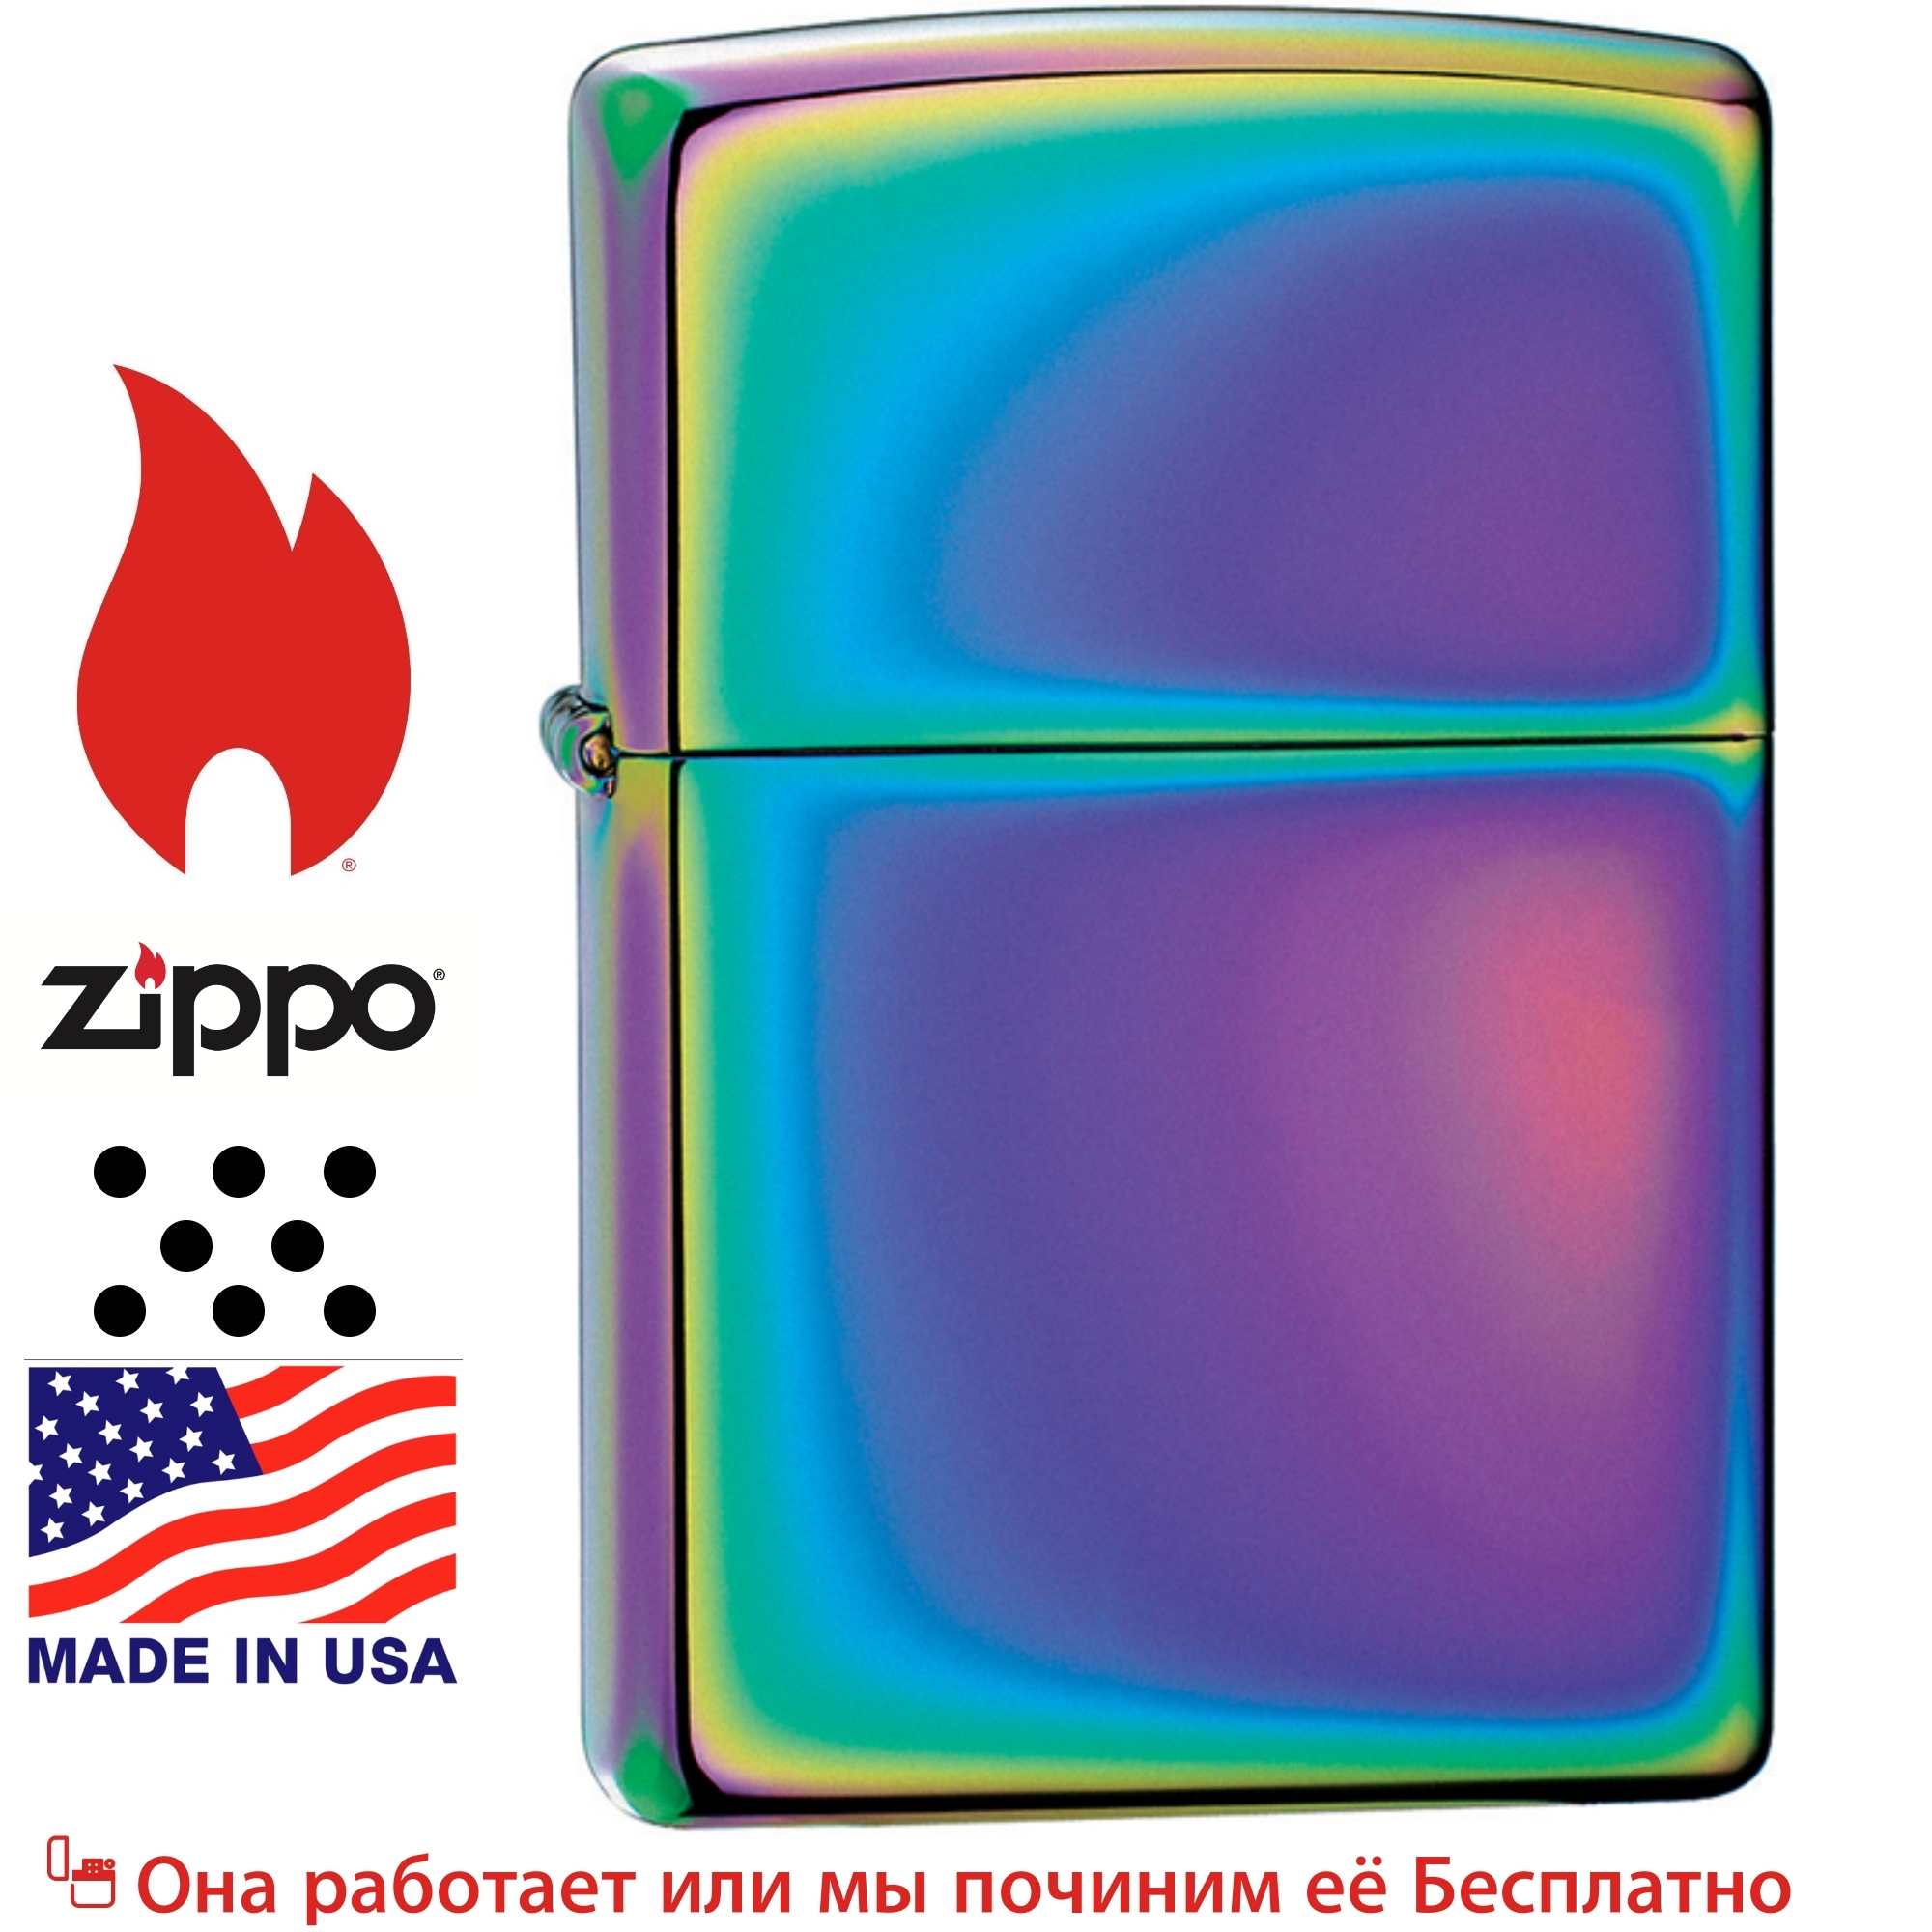  ZIPPO Classic ОРИГИНАЛ-Покрытие Spectrum-Глянцевая Зиппо MADE .